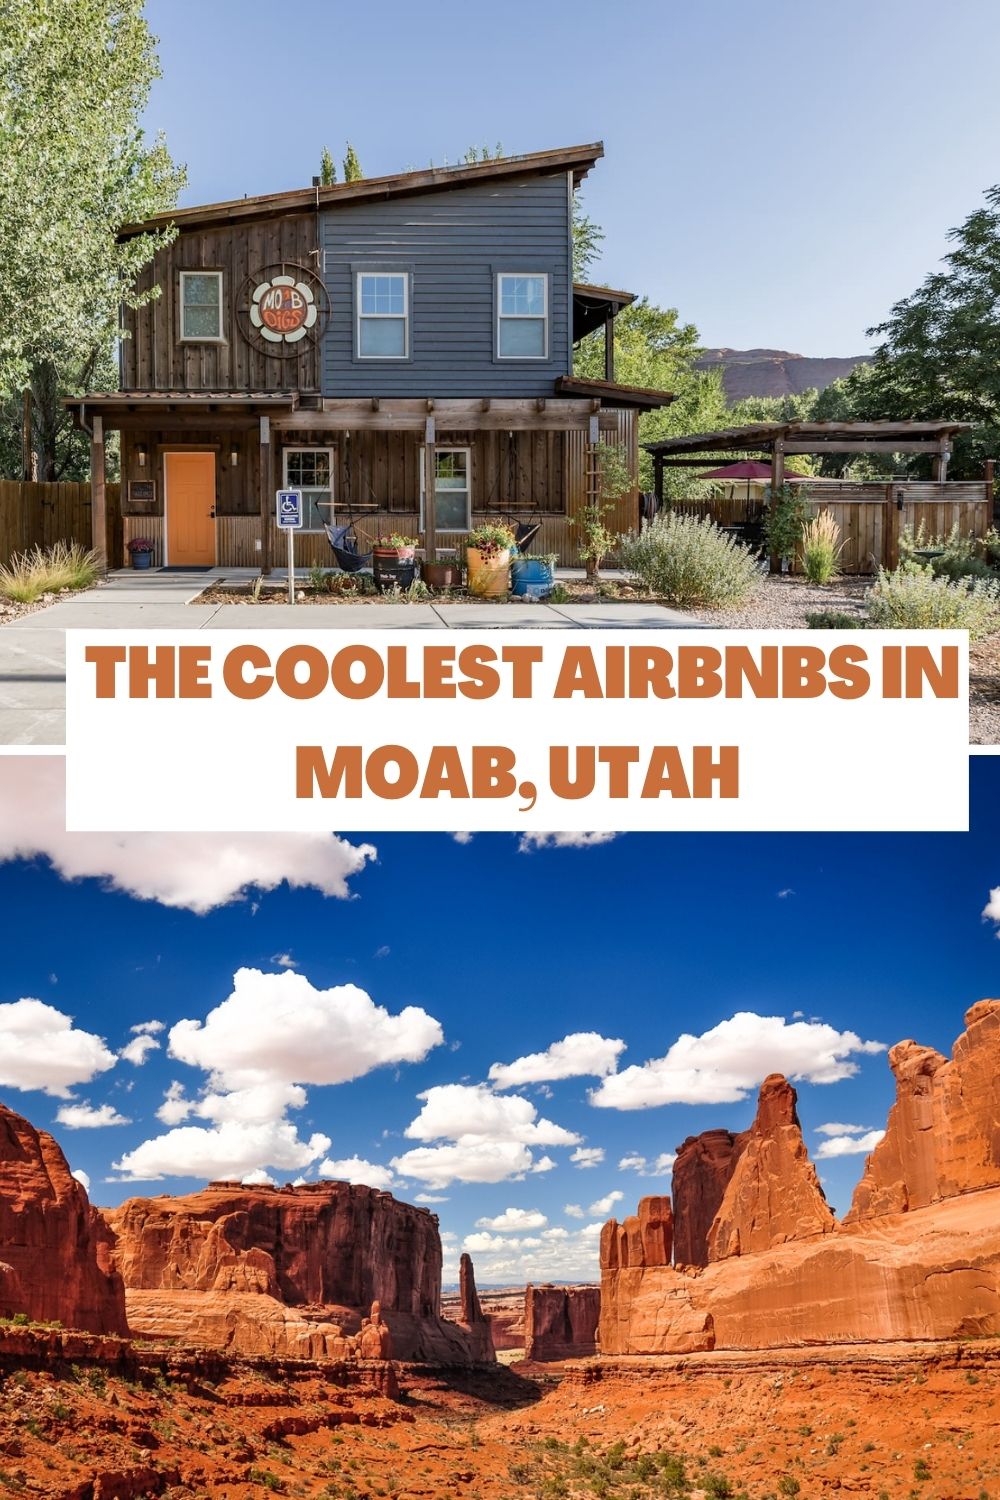 airbnb moab utah - Pinterest